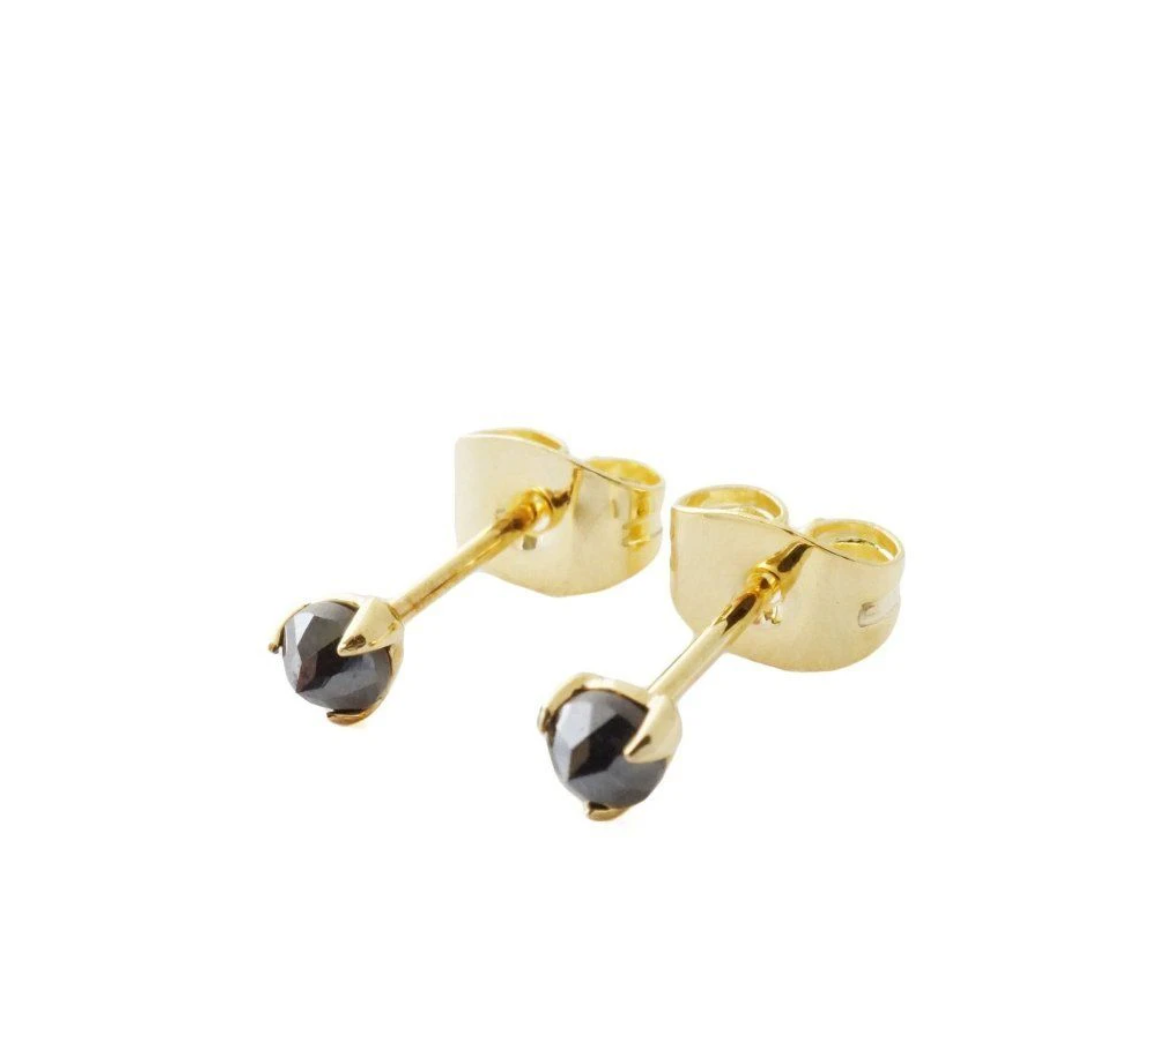 Iron Nickel Meteorite Earrings | Shopee Singapore